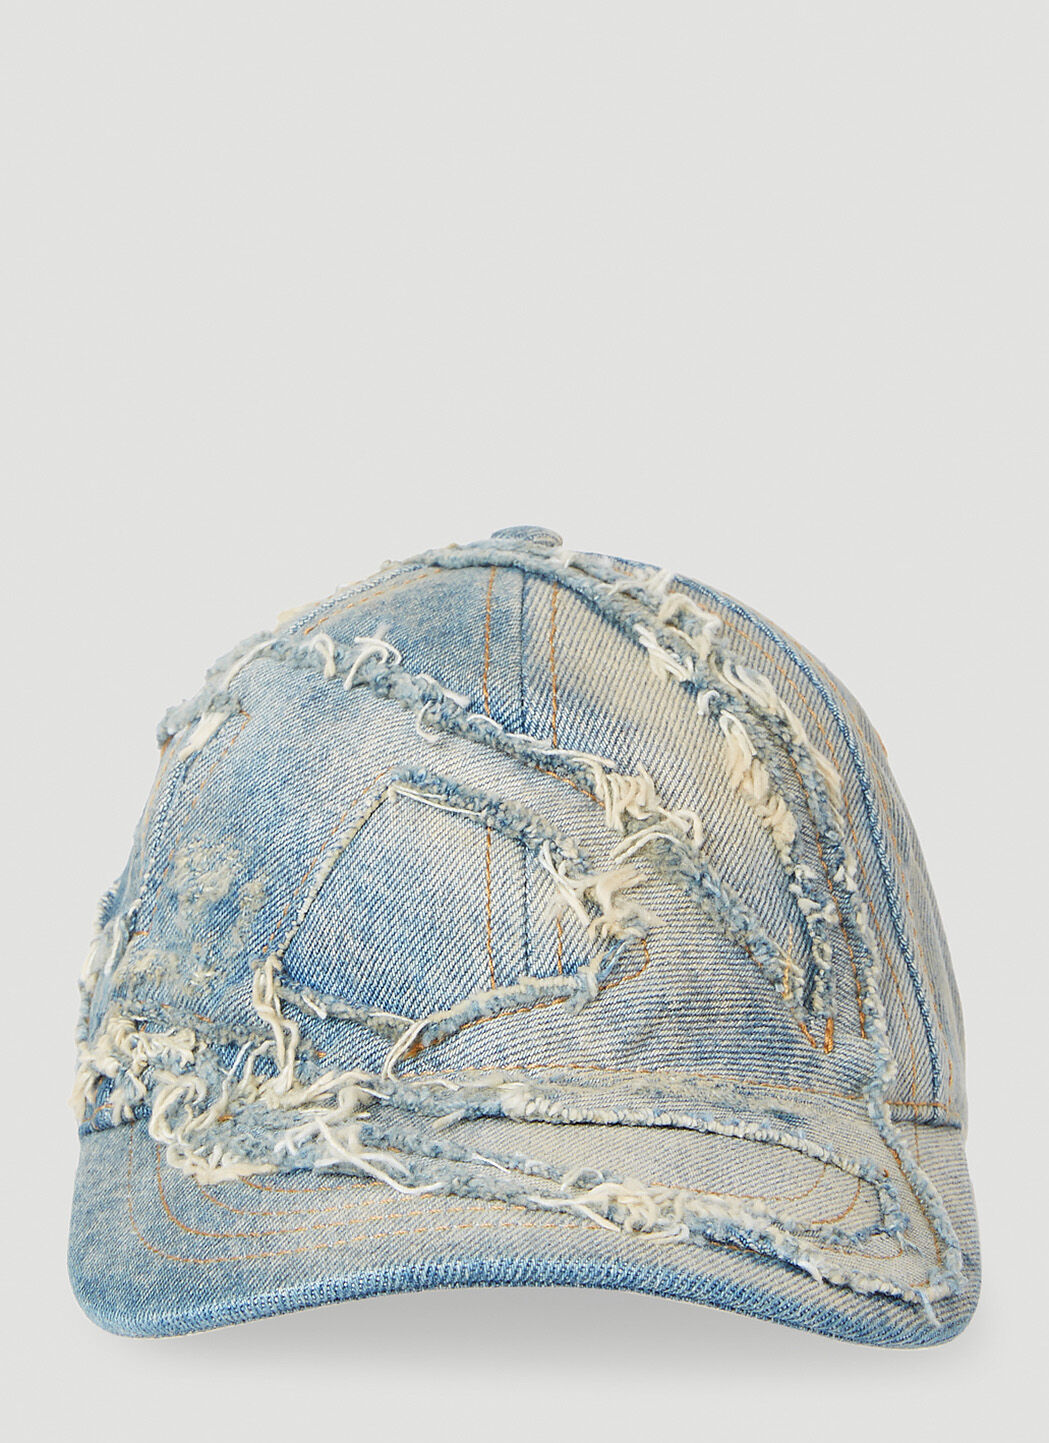 Summer Women Men Washed Denim Baseball Cap Distressed Ripped Jean Hat  Adjustable | eBay